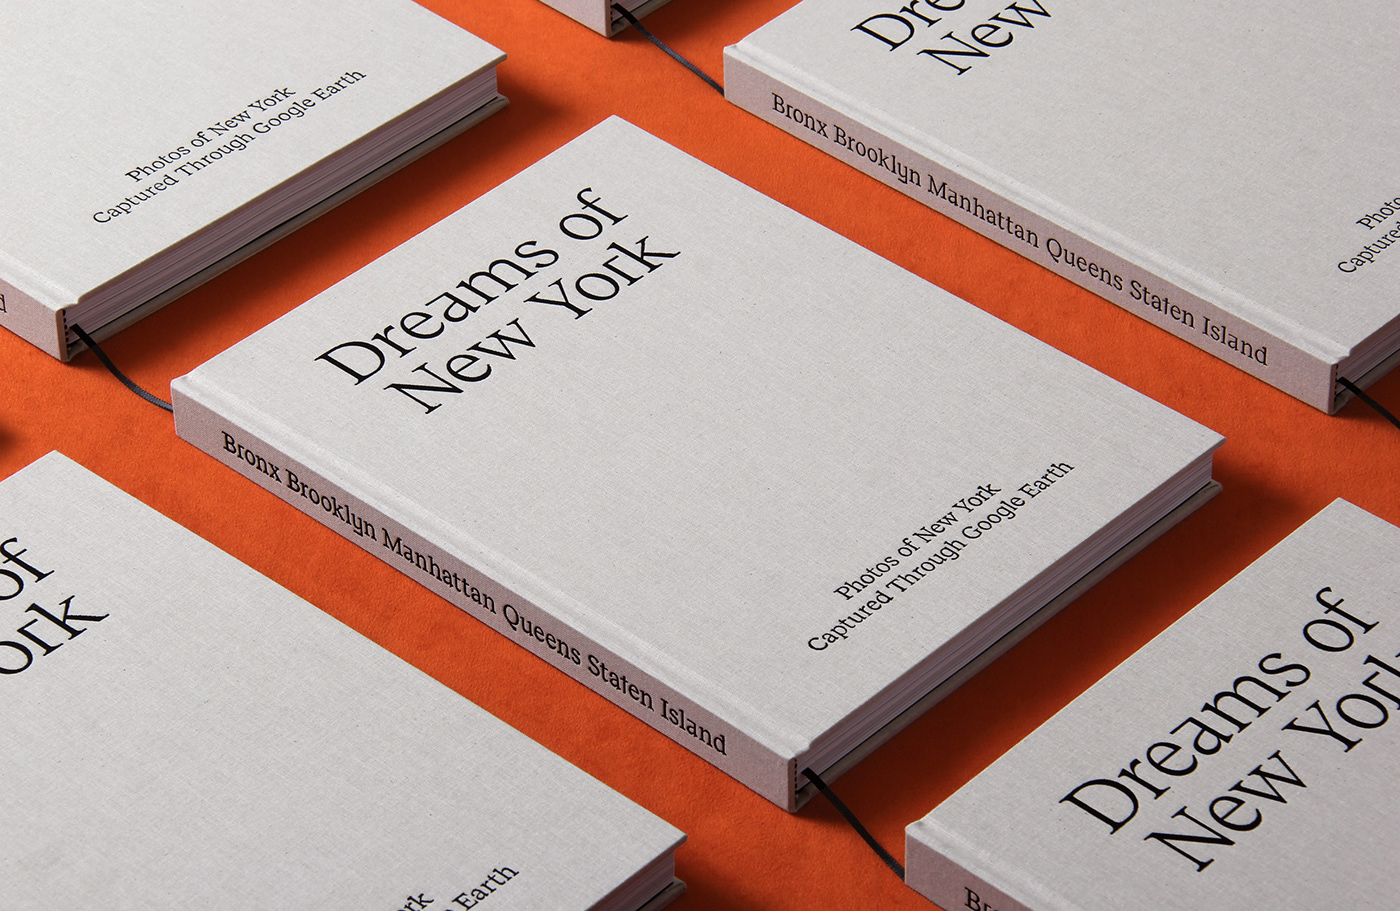 print design  book design print book cover New York dreams editorial design  black and white Photography  book